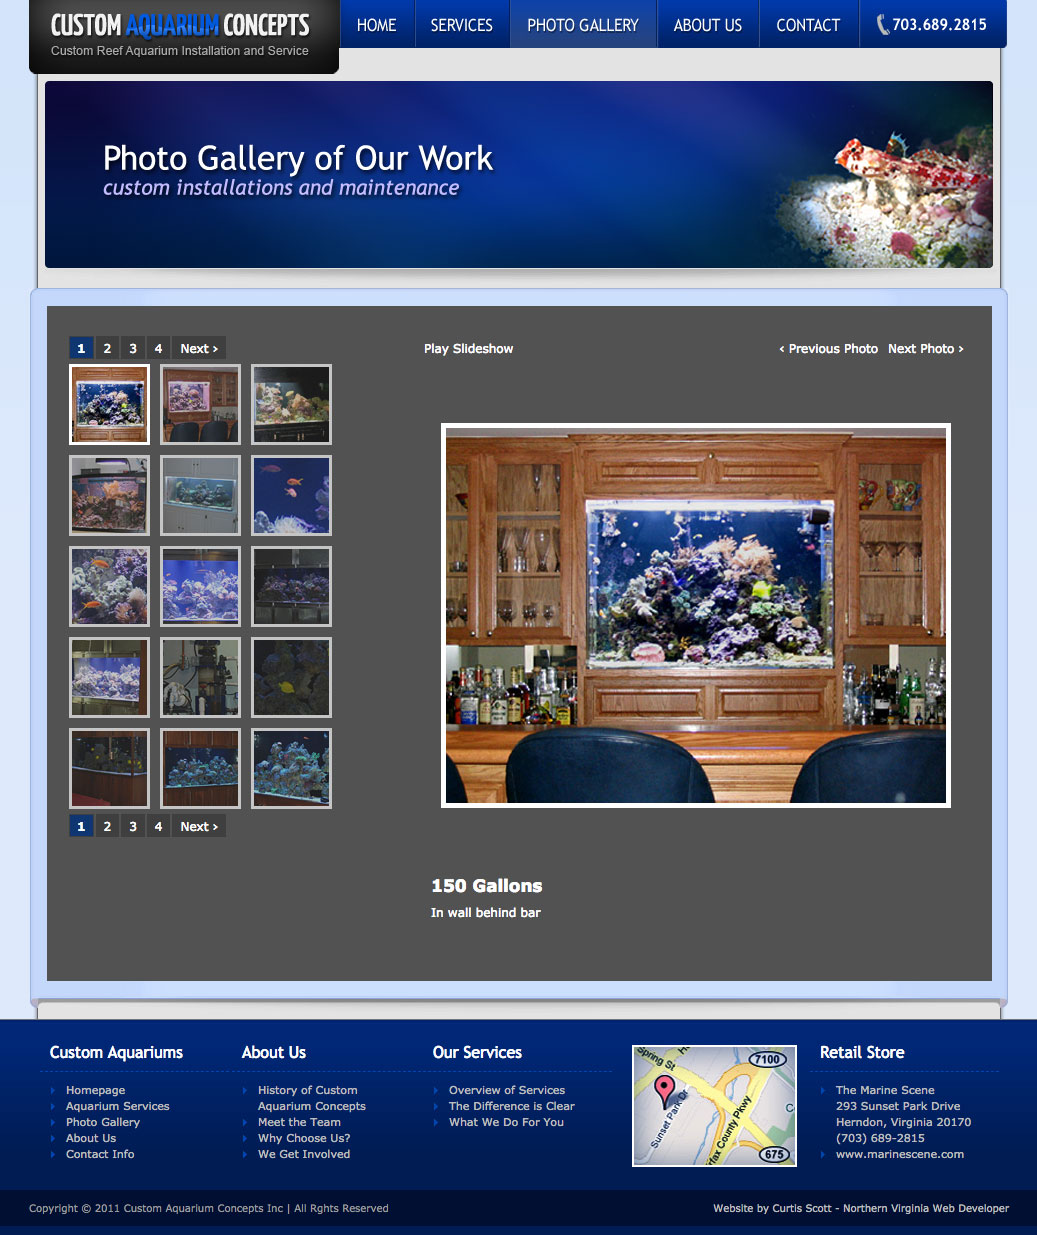 Custom Aquarium Concepts UI design screenshot of the photo gallery page